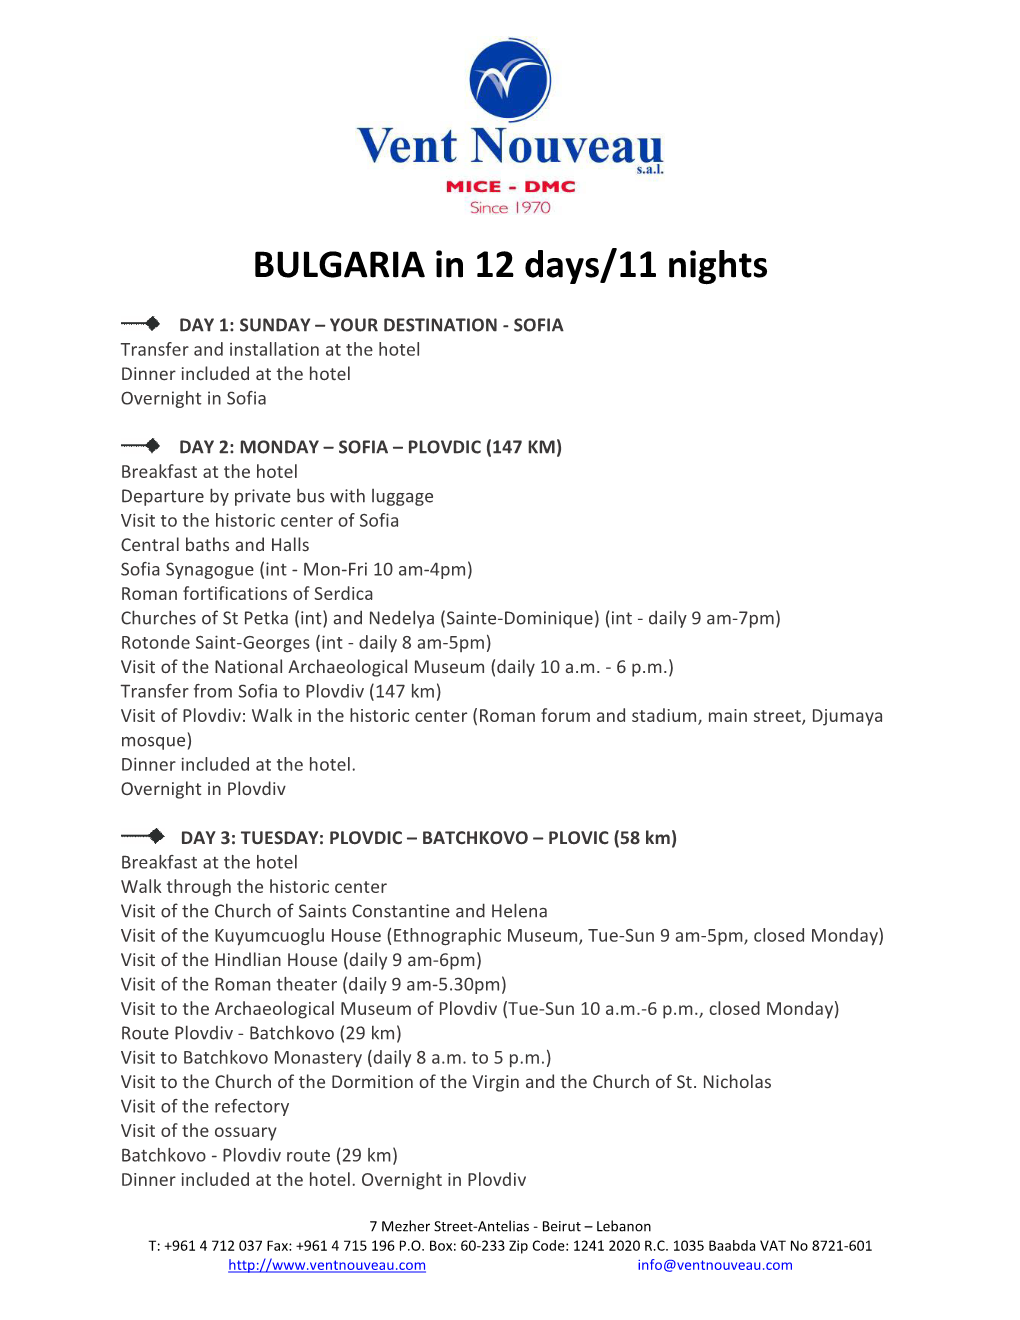 BULGARIA in 12 Days/11 Nights